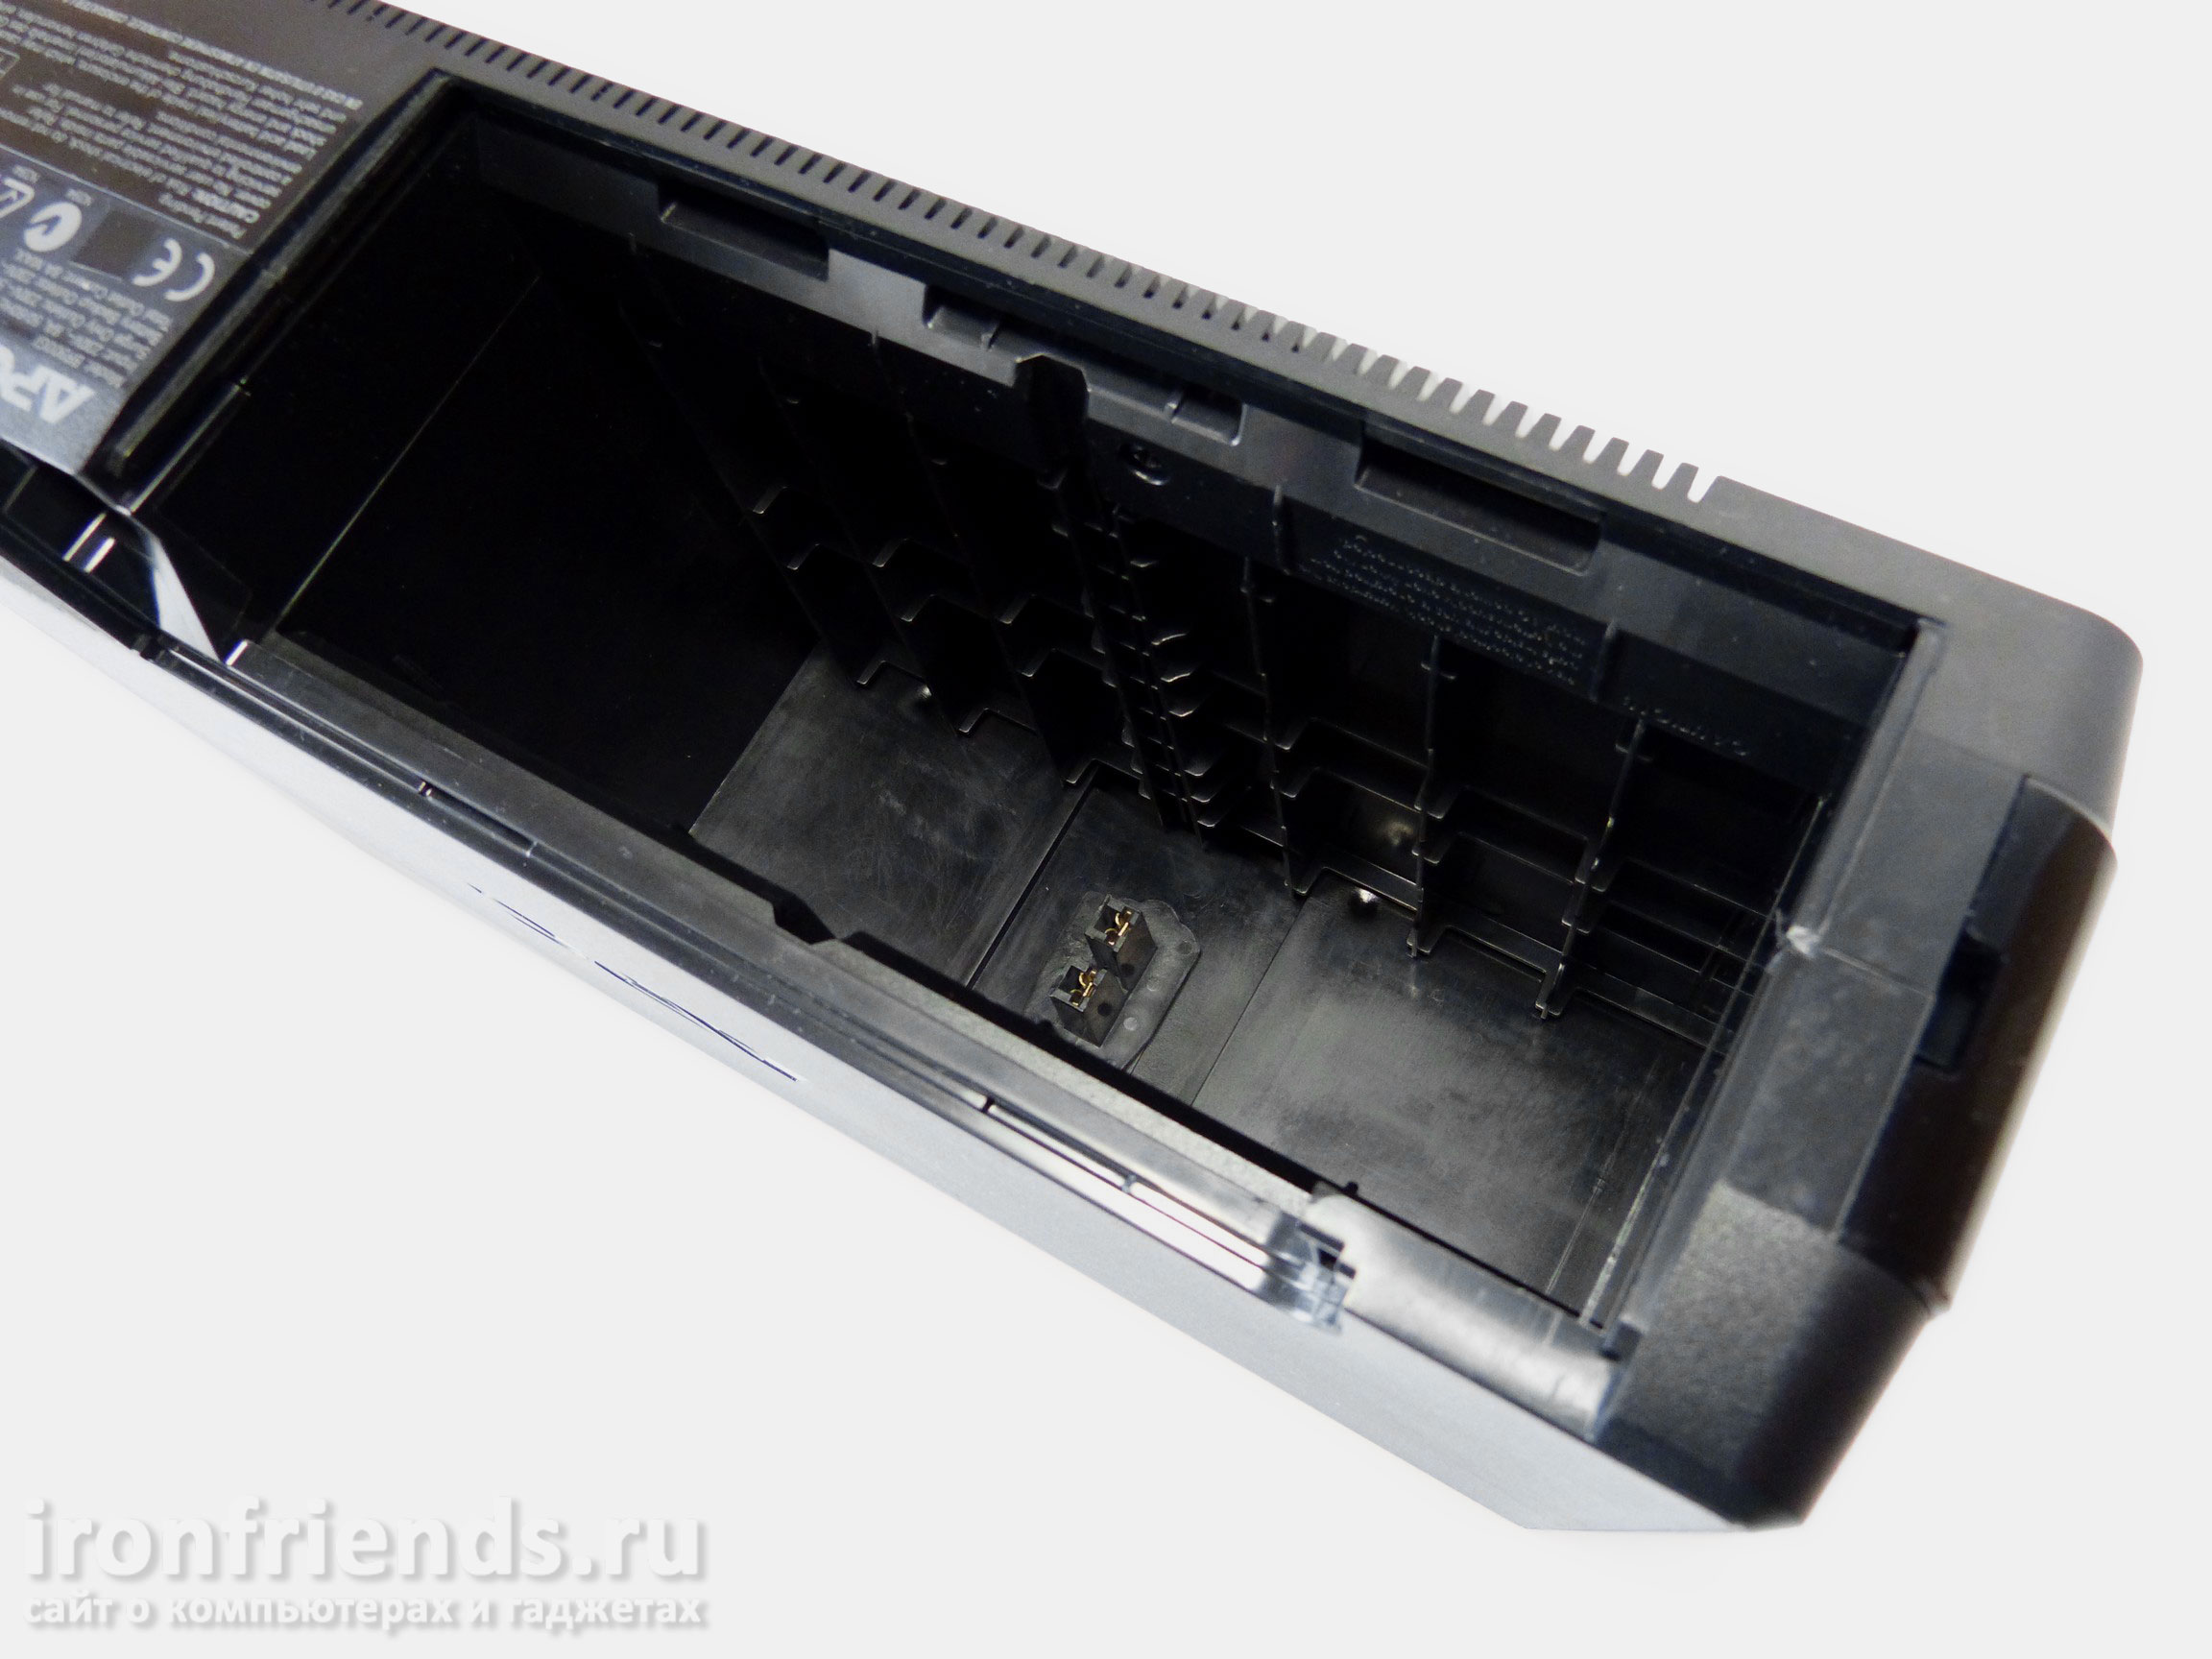 APC Back-UPS Pro 900 (BR900GI)